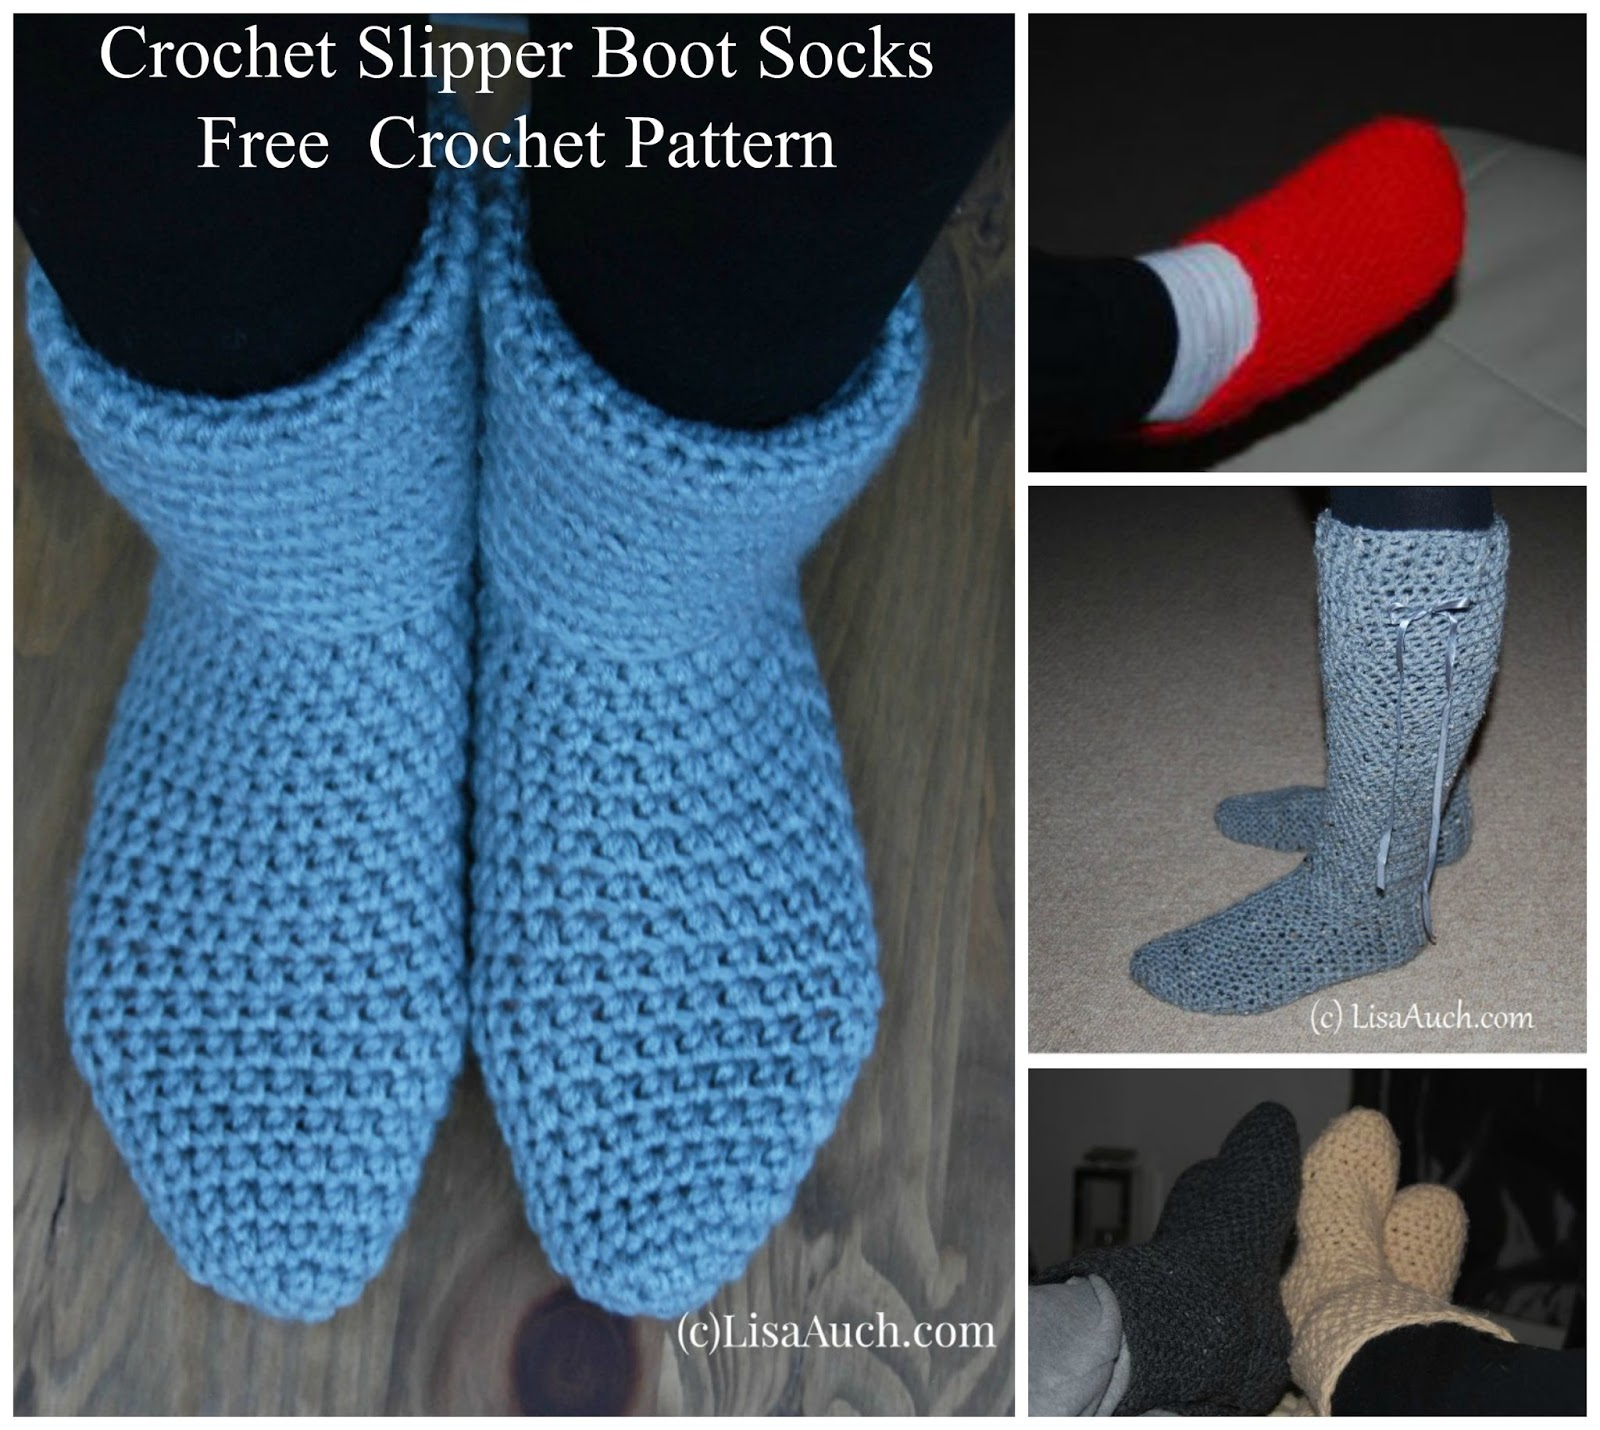 Crochet Slippers Pattern Free Free Crochet Patterns And Designs Lisaauch Crochet Slipper Boots